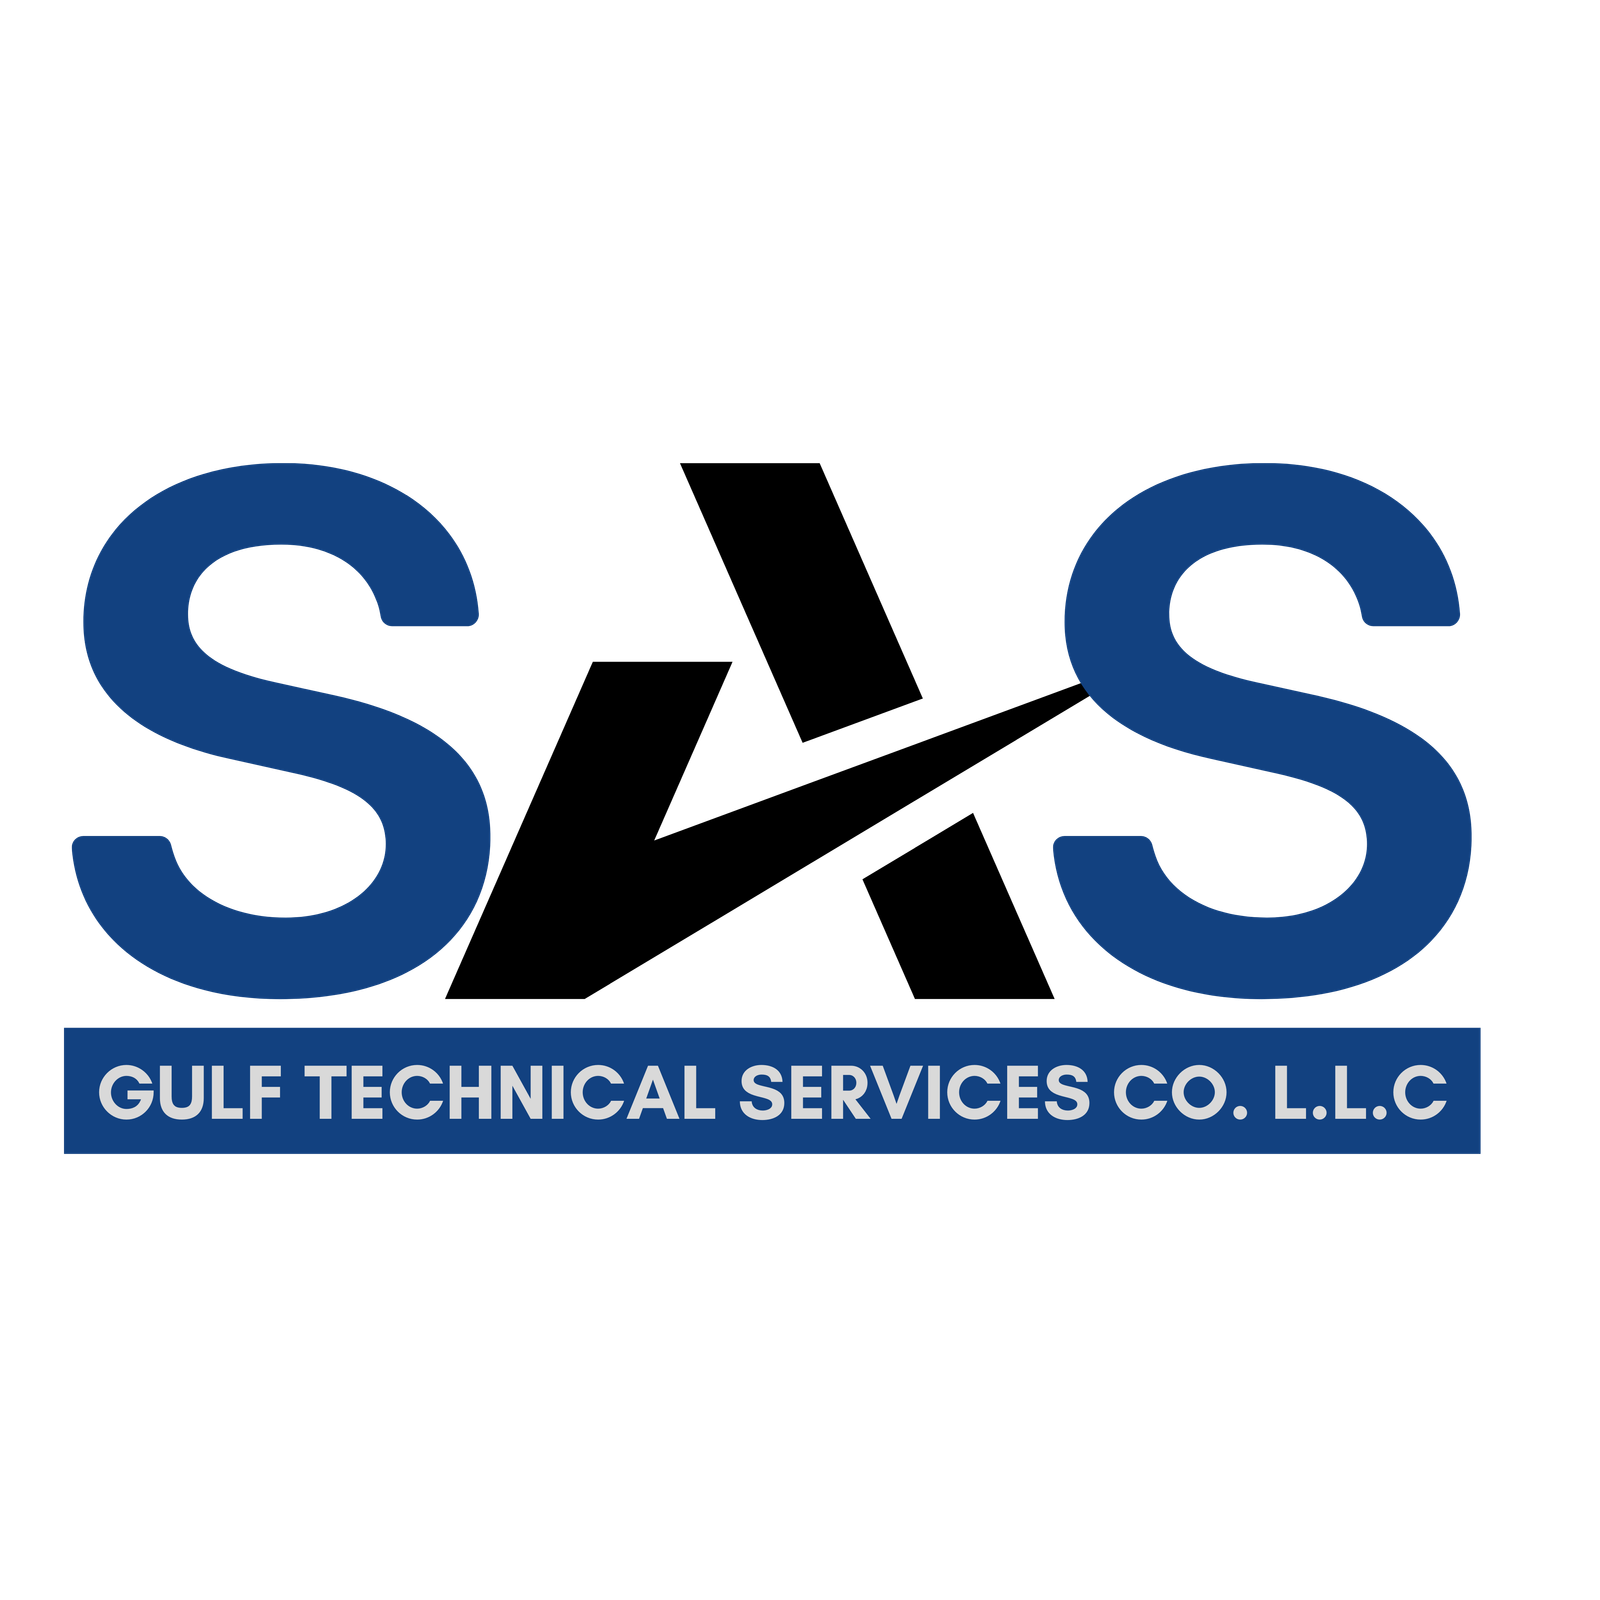 SAS GULF TECHNICAL SERVICES CO. L.L.C